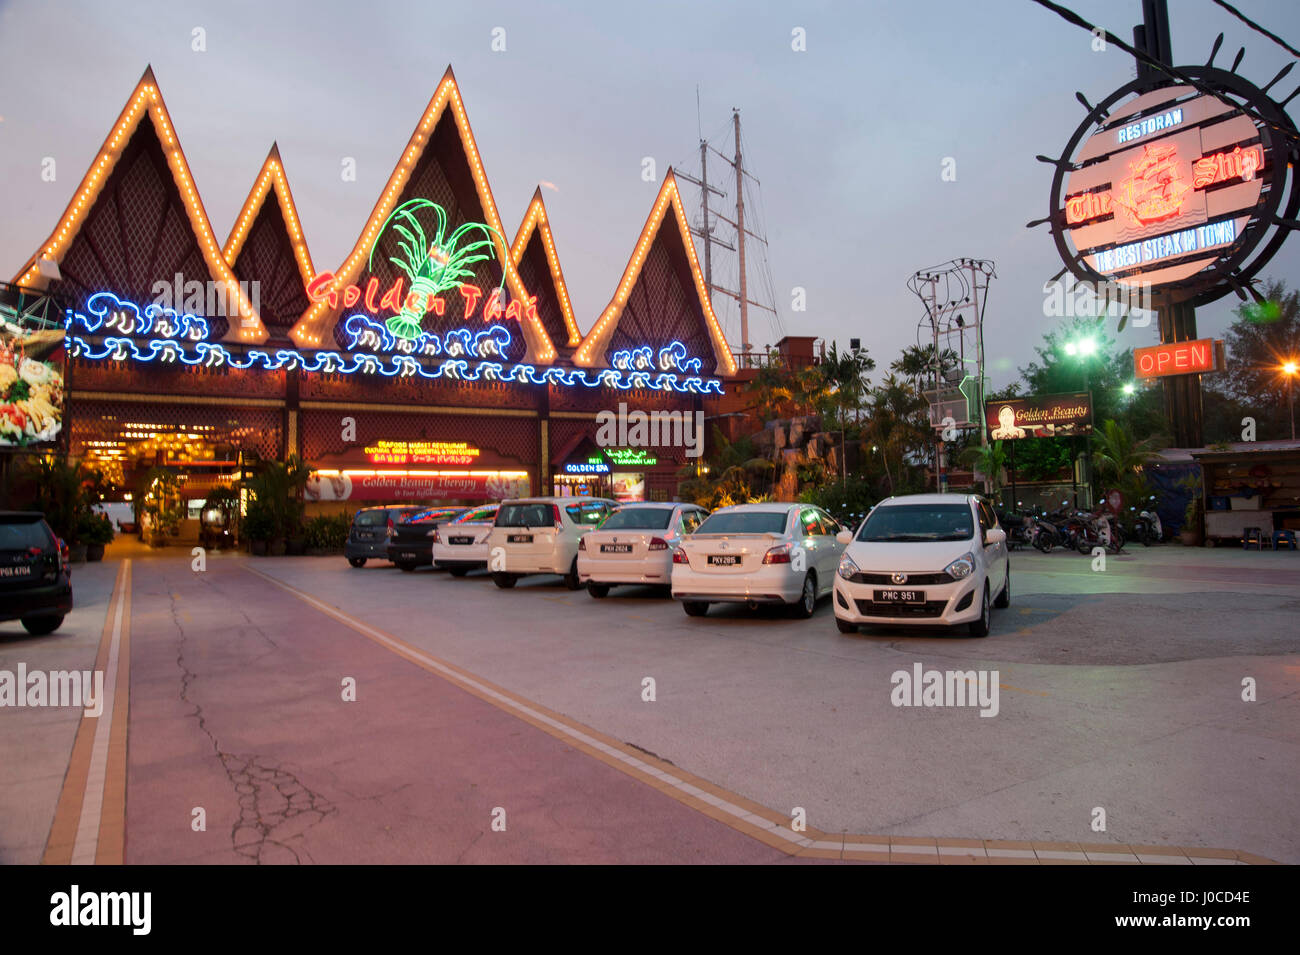 Golden thai-Restaurant am Strand, Penang, Malaysia, Asien Stockfoto